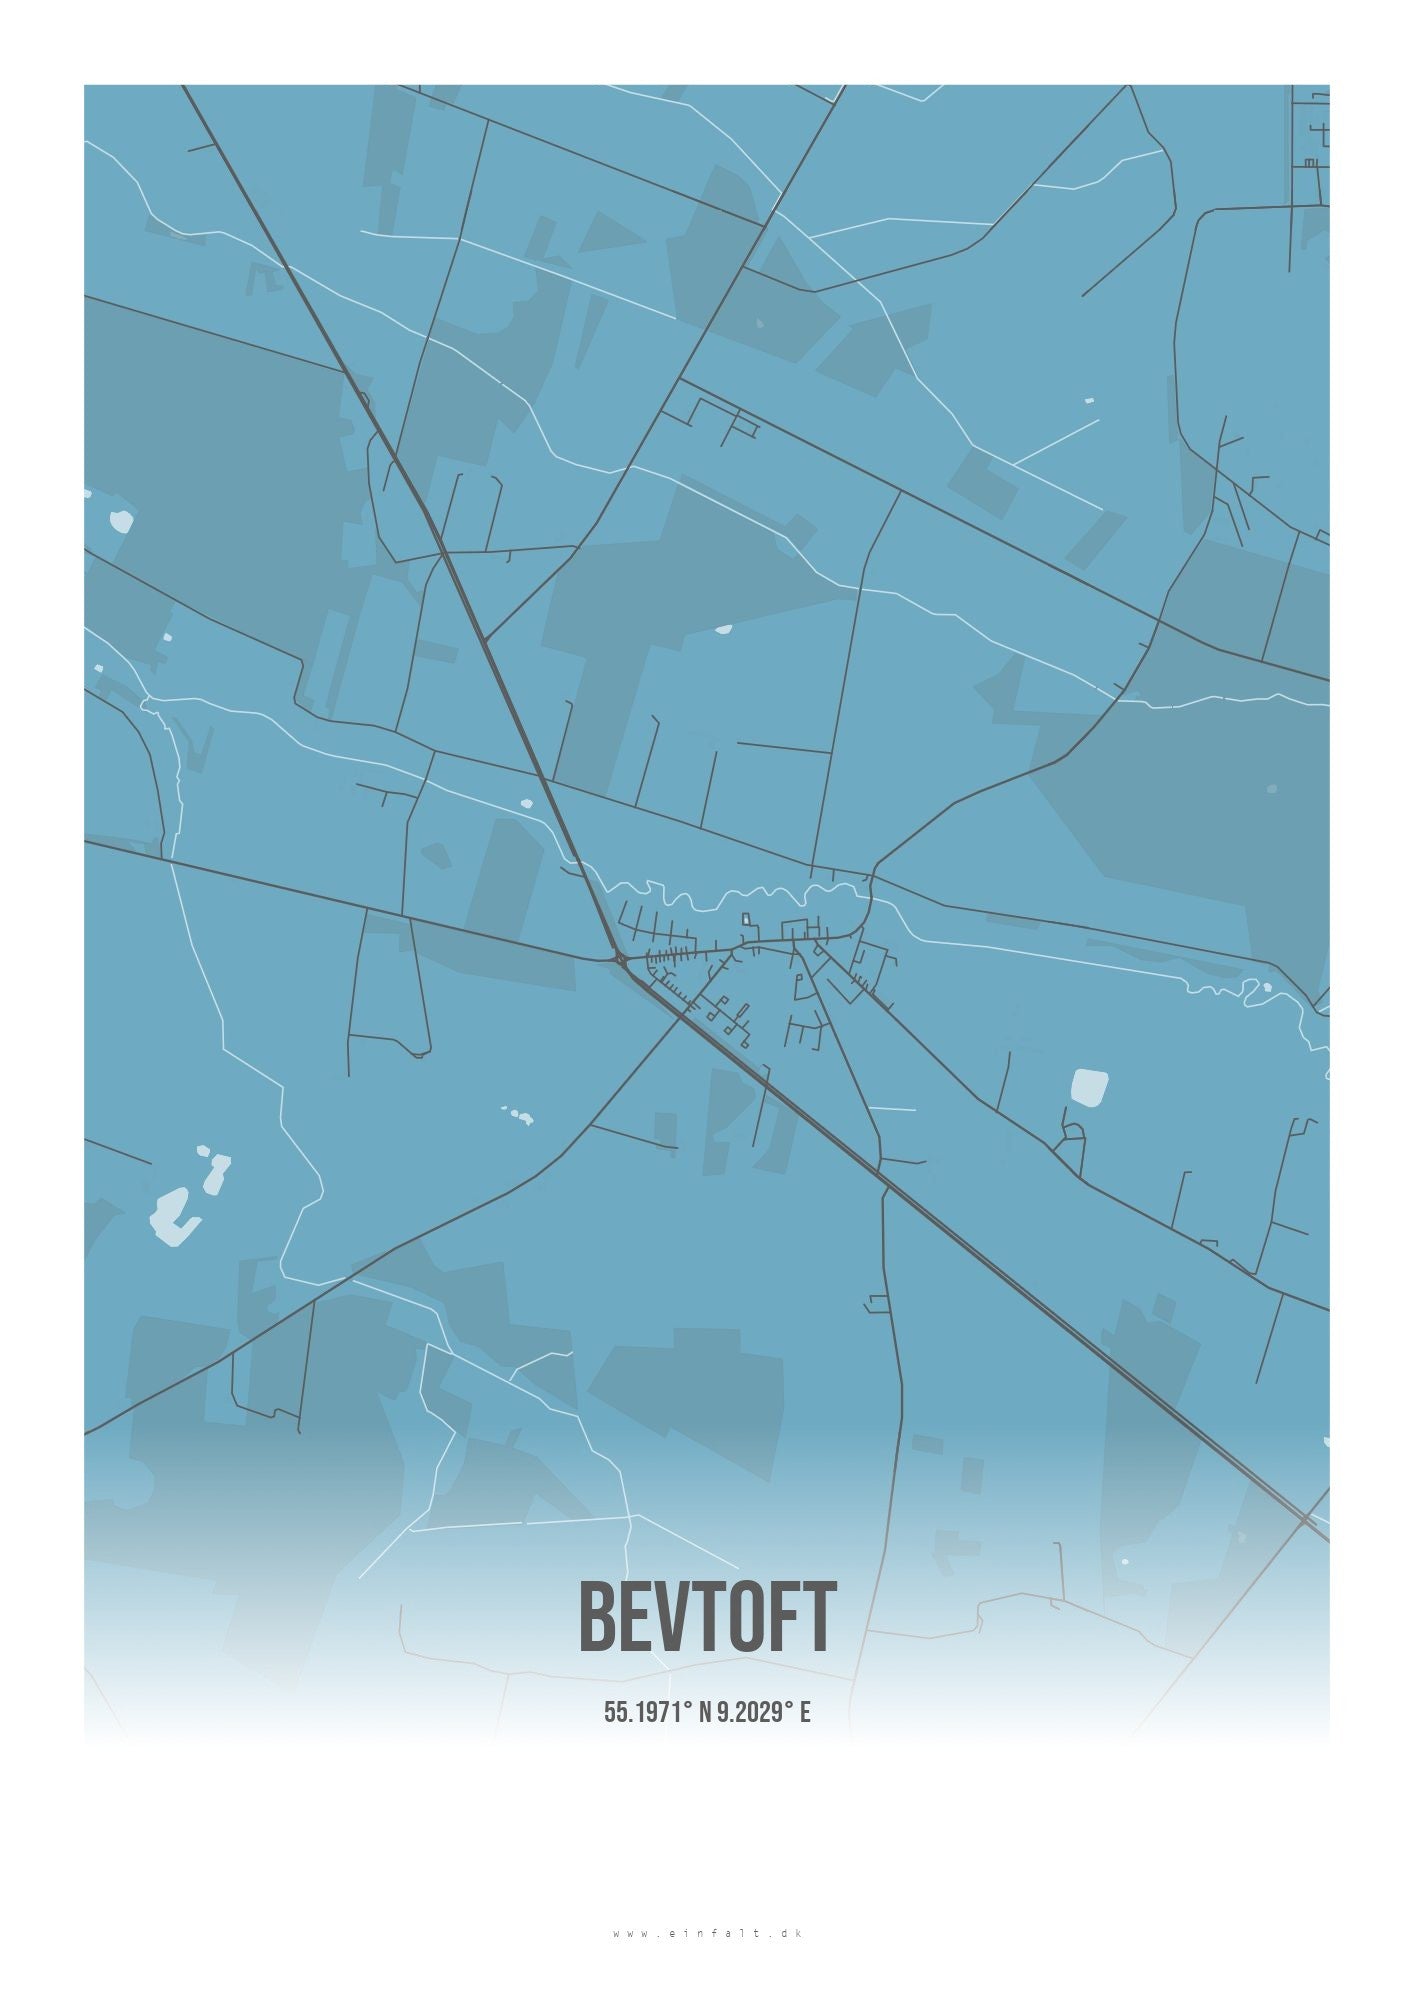 Streetmap - Bevtoft